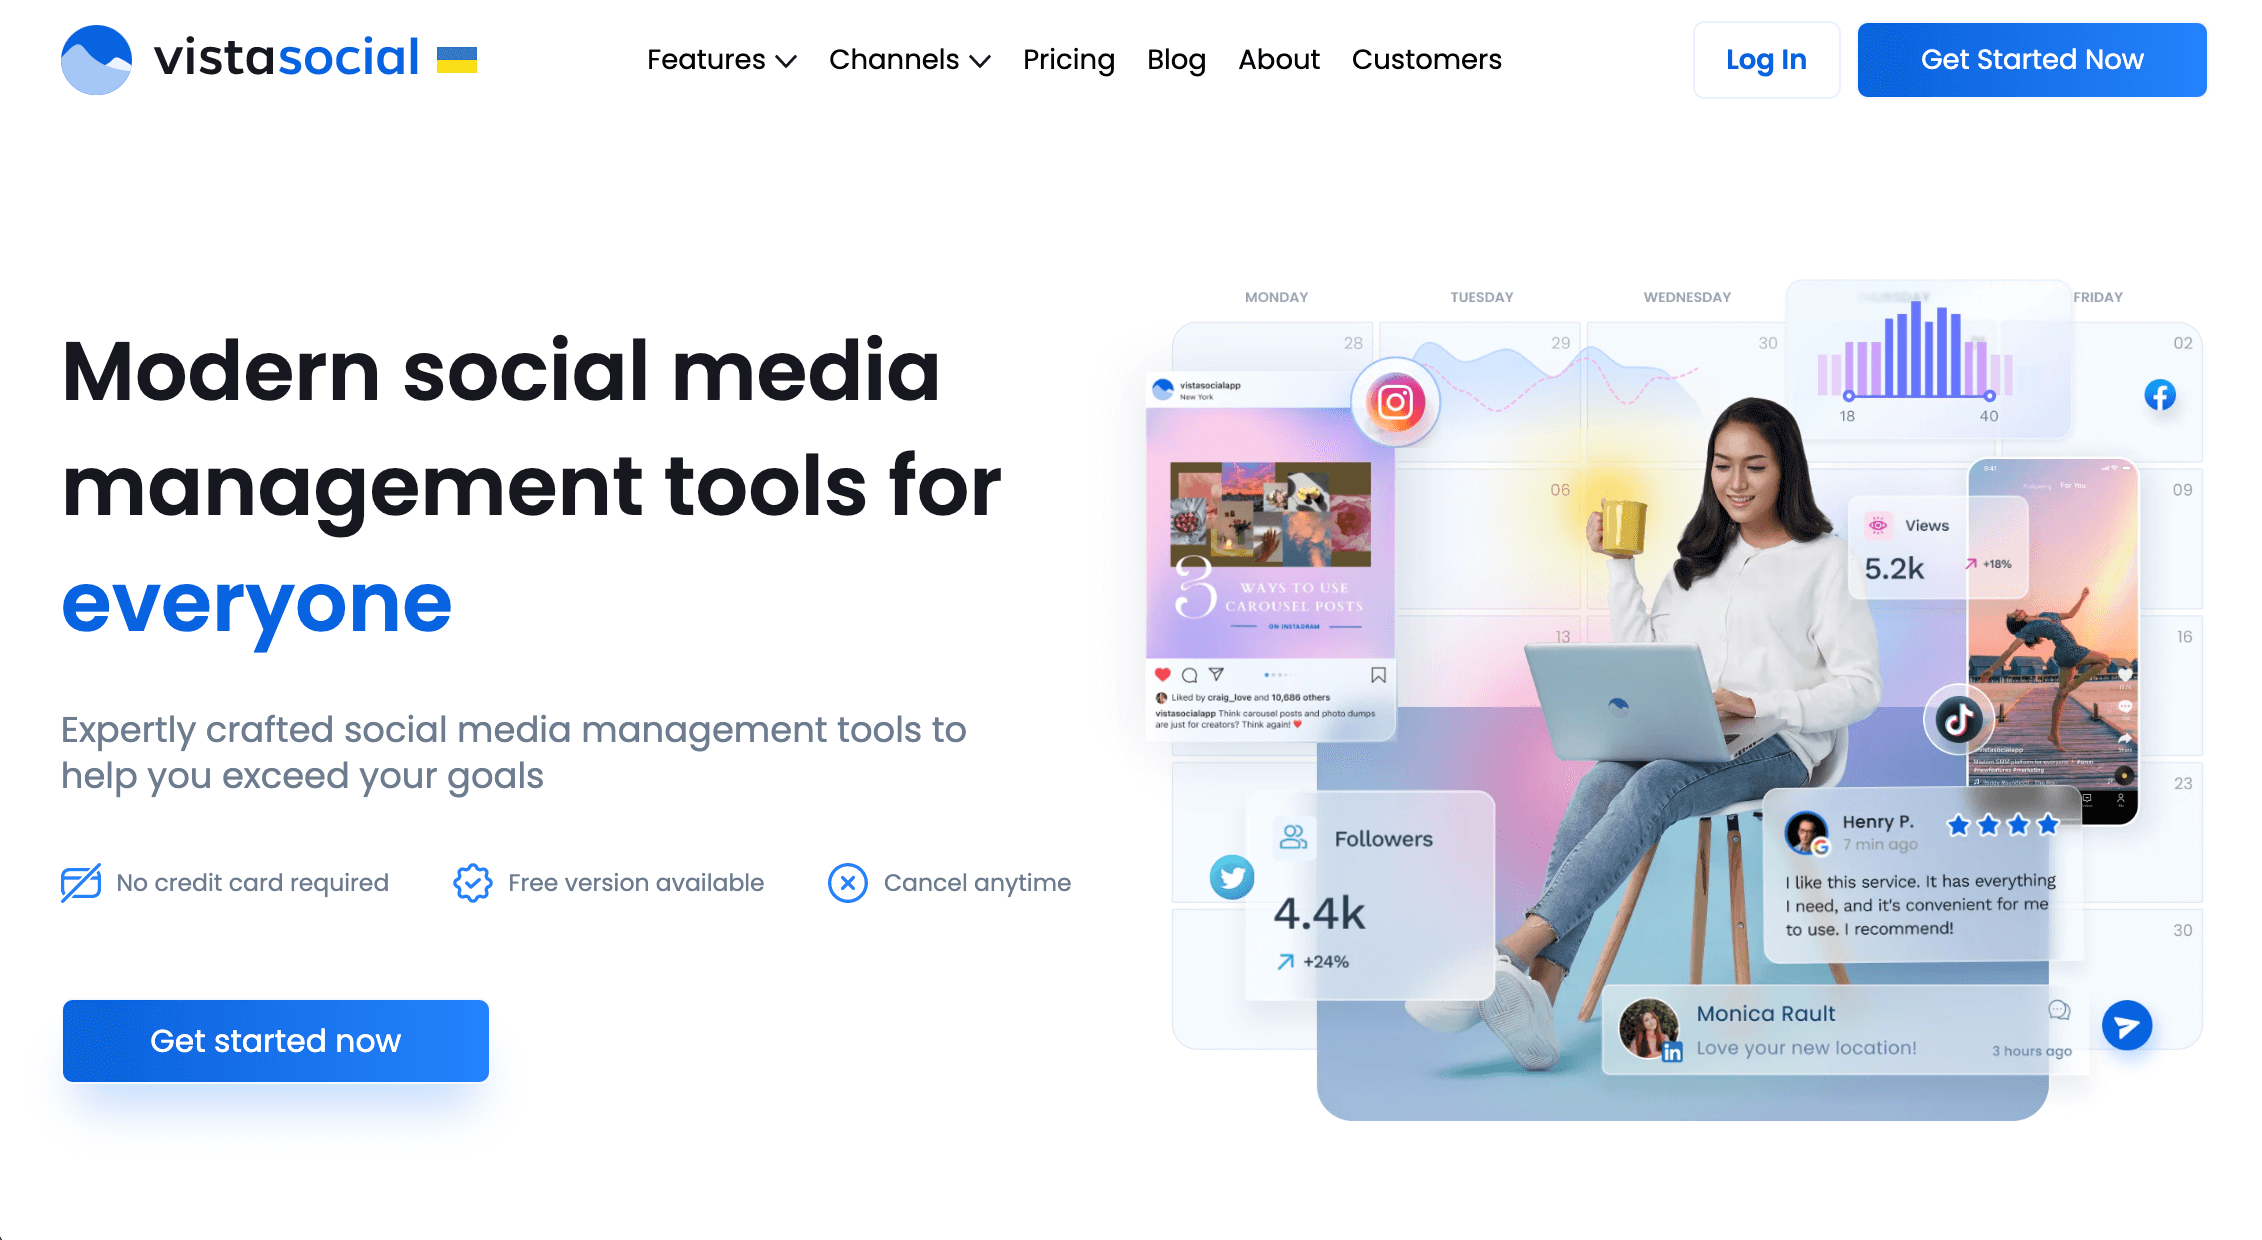 Vista Social's homepage